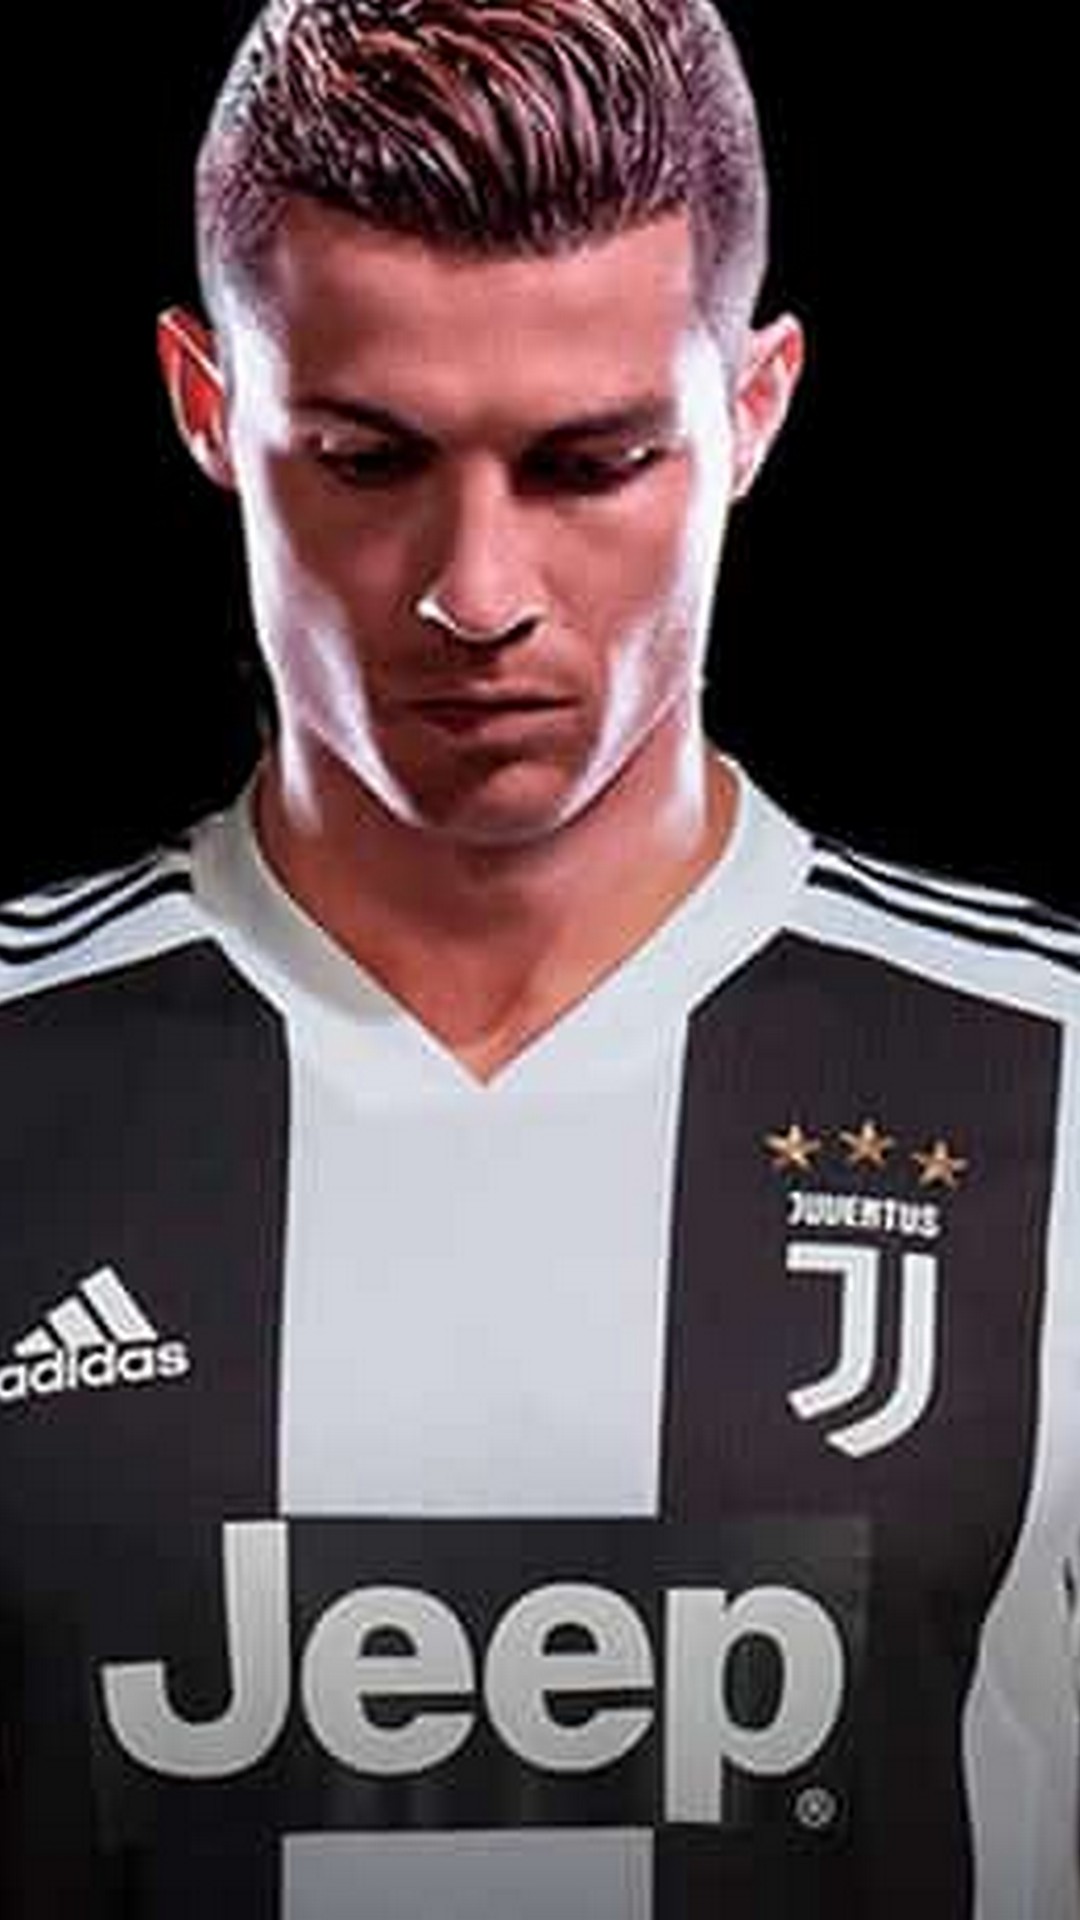 Cristiano Ronaldo Juventus Wallpaper iPhone 2020 3D iPhone Wallpaper